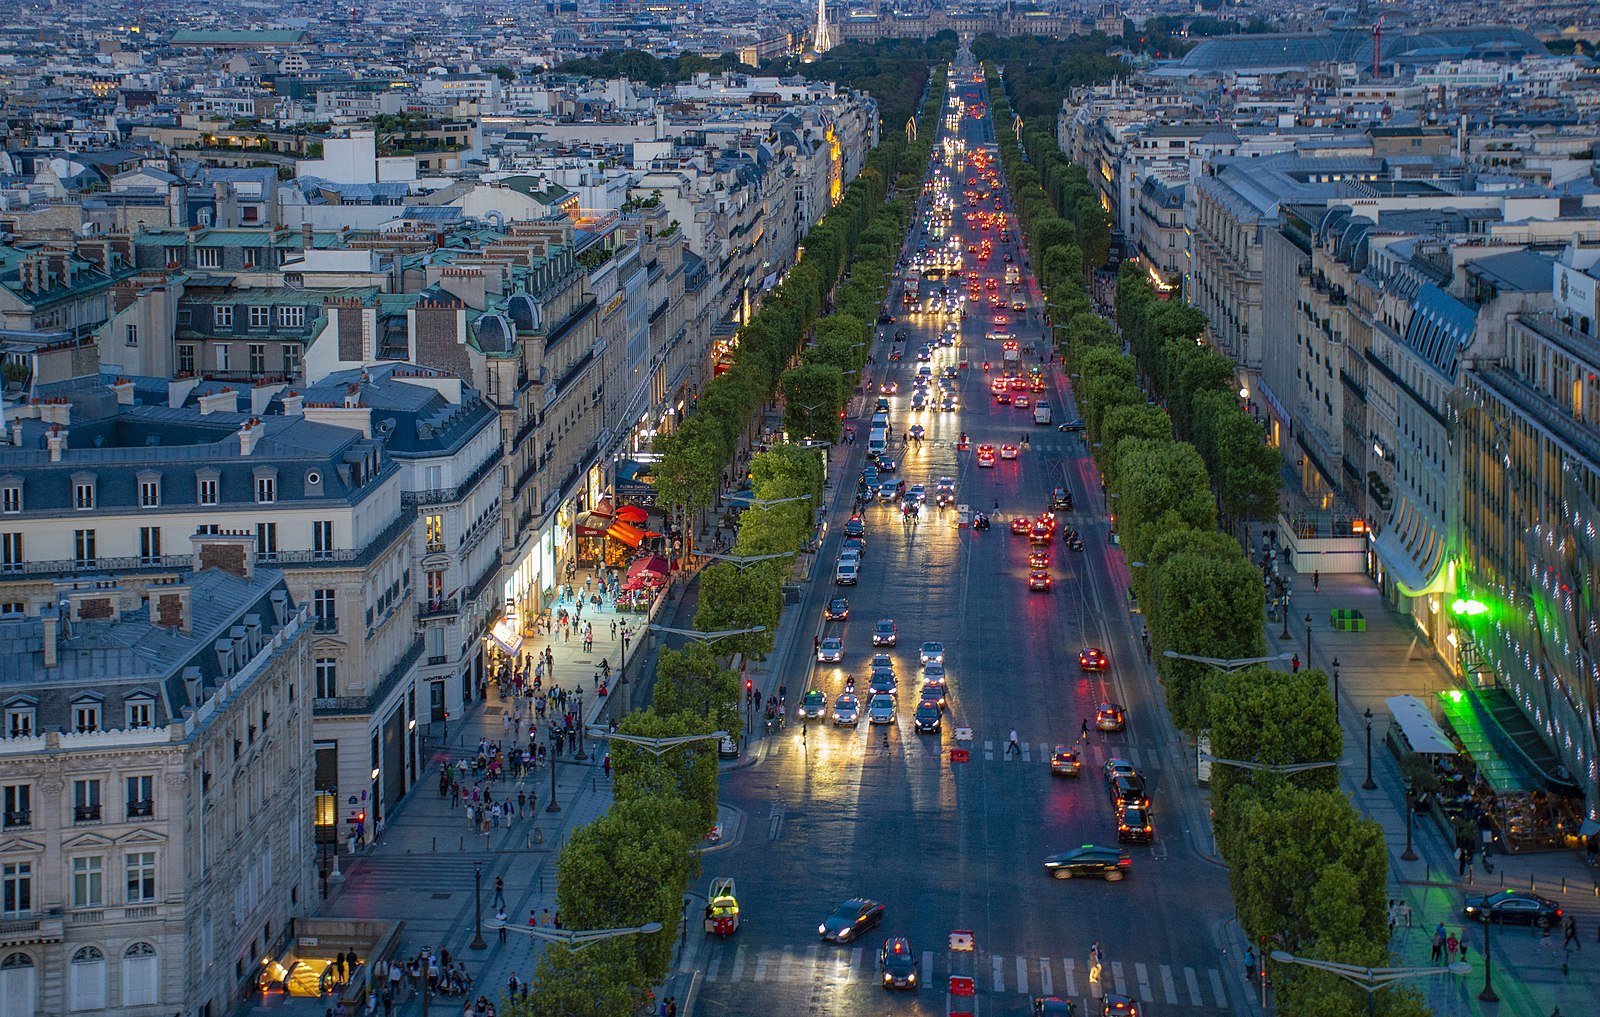 Champs Elysees (Елисейские поля)